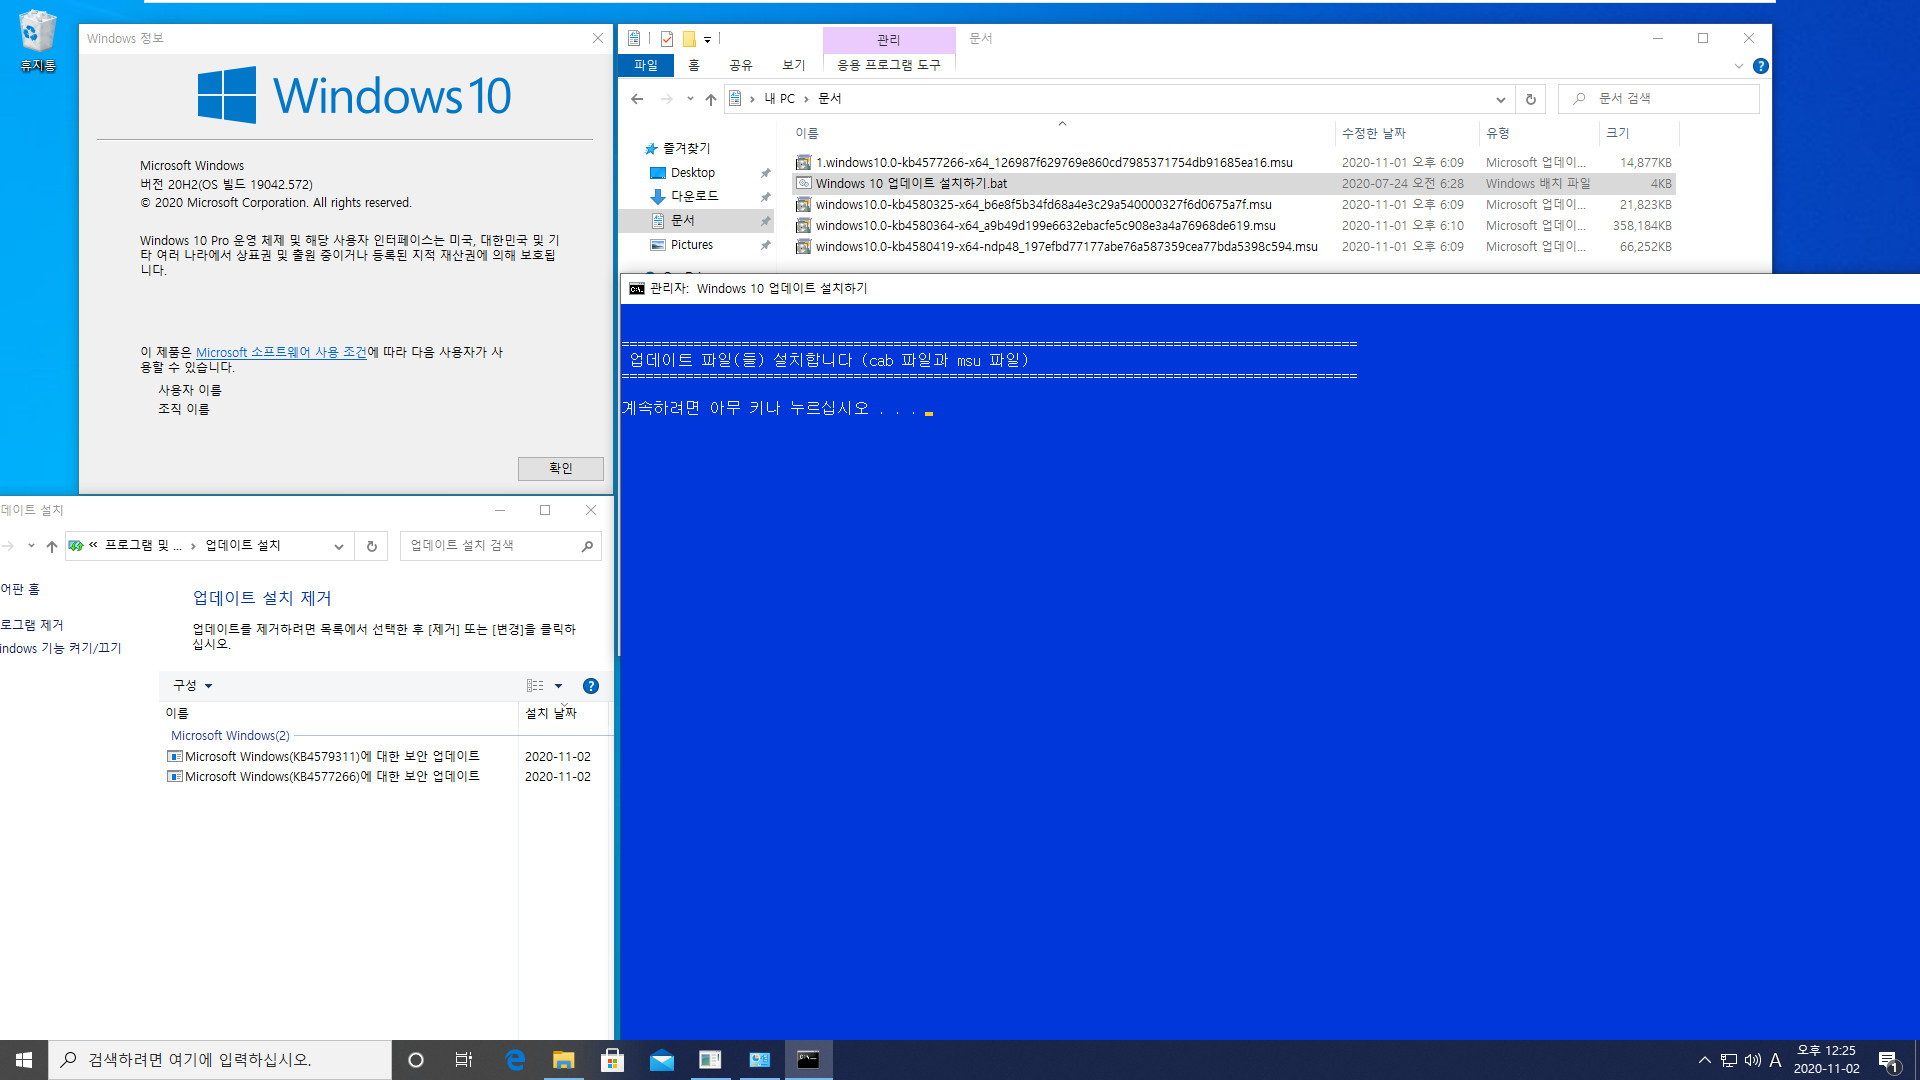 Windows 10 버전 20H2 기능 업데이트 KB4562830 폴더의 mum 파일들만 찾아서 설치하기.bat - 크로미엄 엣지 설치하지 않고 버전 20H2만 설치하기 테스트 -  msu 파일 설치하면 되네요 2020-11-02_122510.jpg